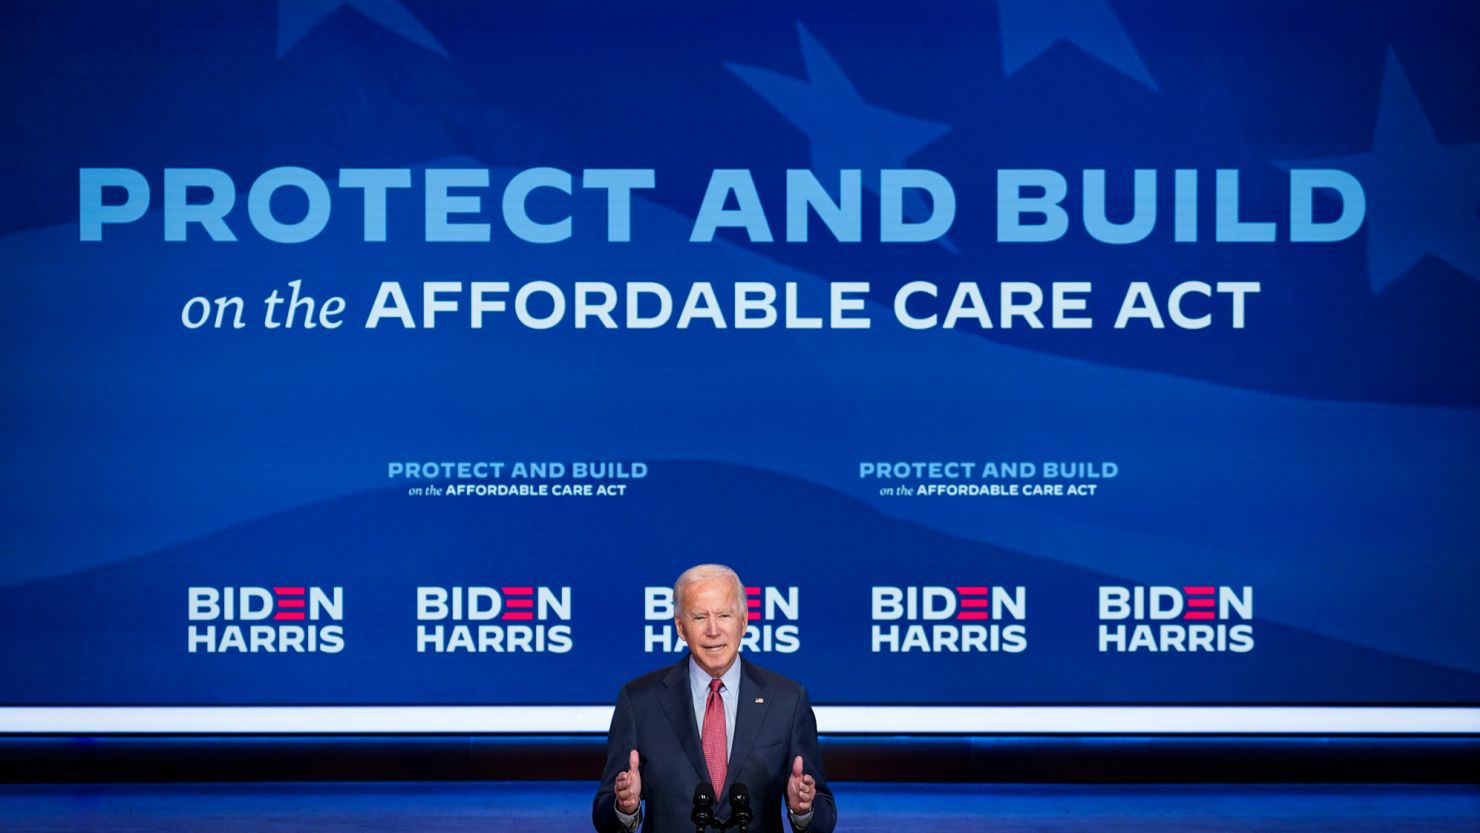 Sign-ups for ACA coverage have soared under President Joe Biden.